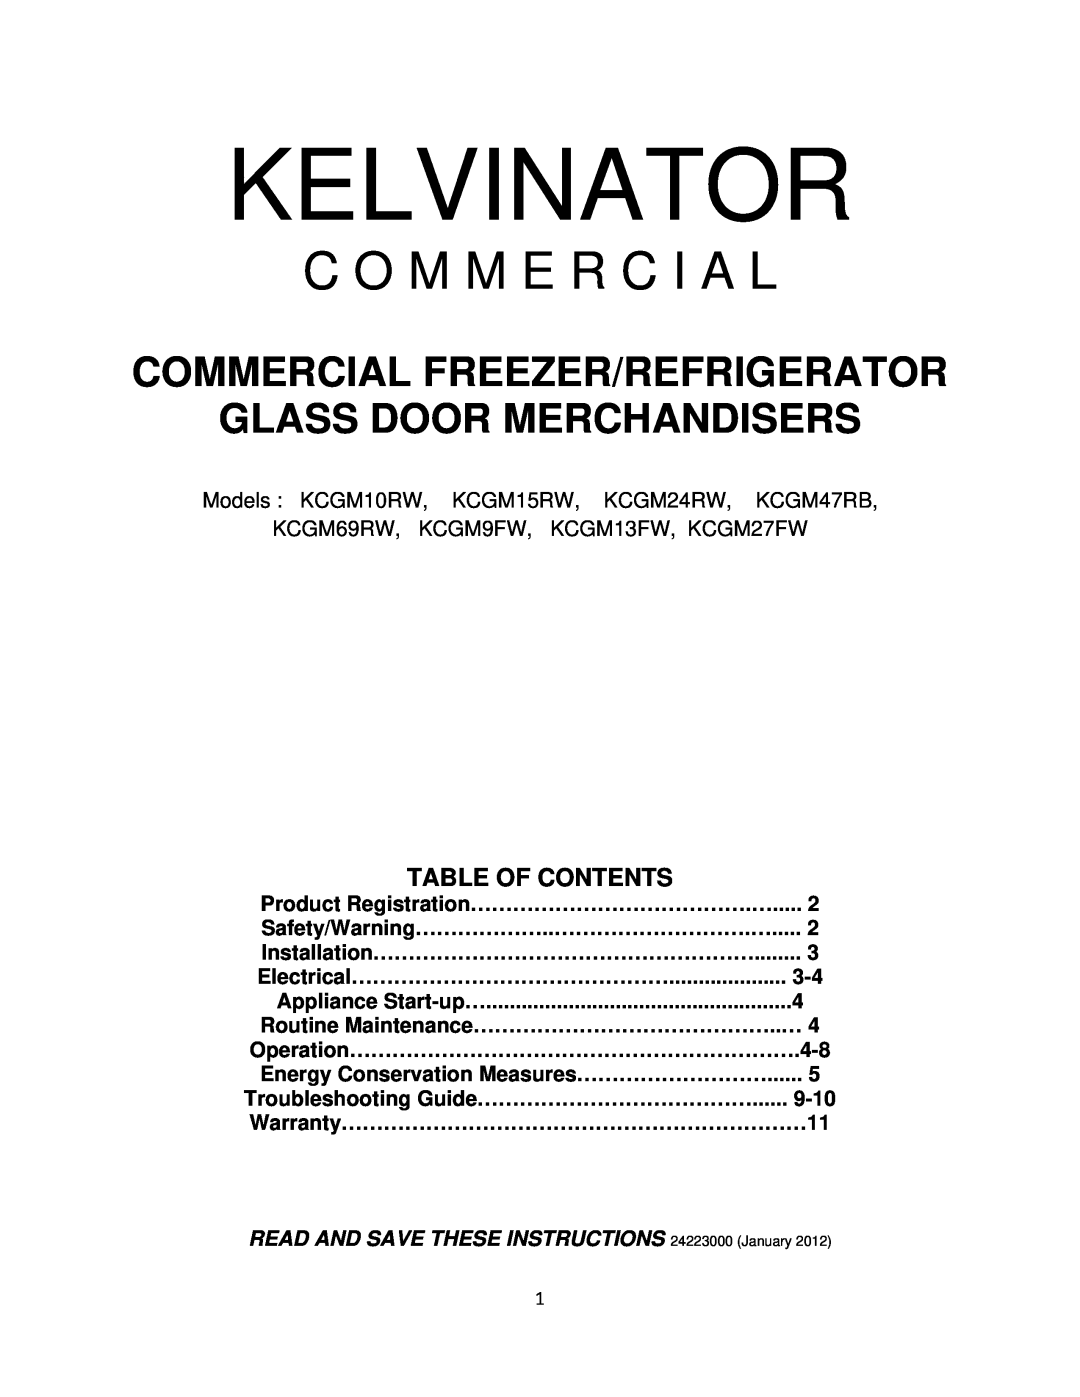 Kelvinator KCGM15RW warranty Kelvinator, C O M M E R C I A L, Commercial Freezer/Refrigerator Glass Door Merchandisers 